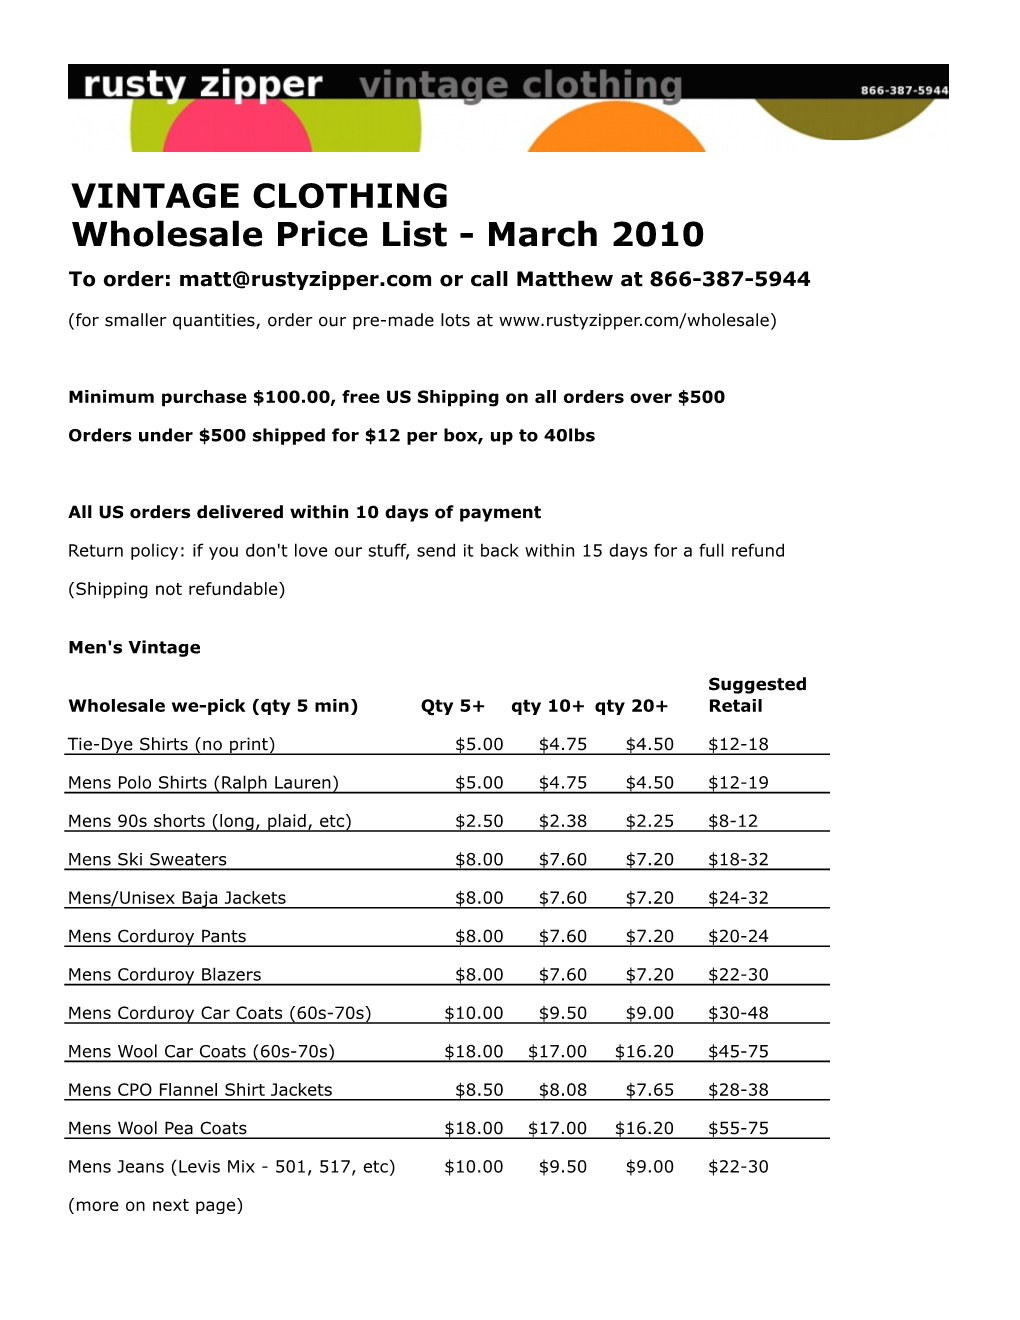 Rustyzipper.Com Wholesale Vintage Clothing Price List